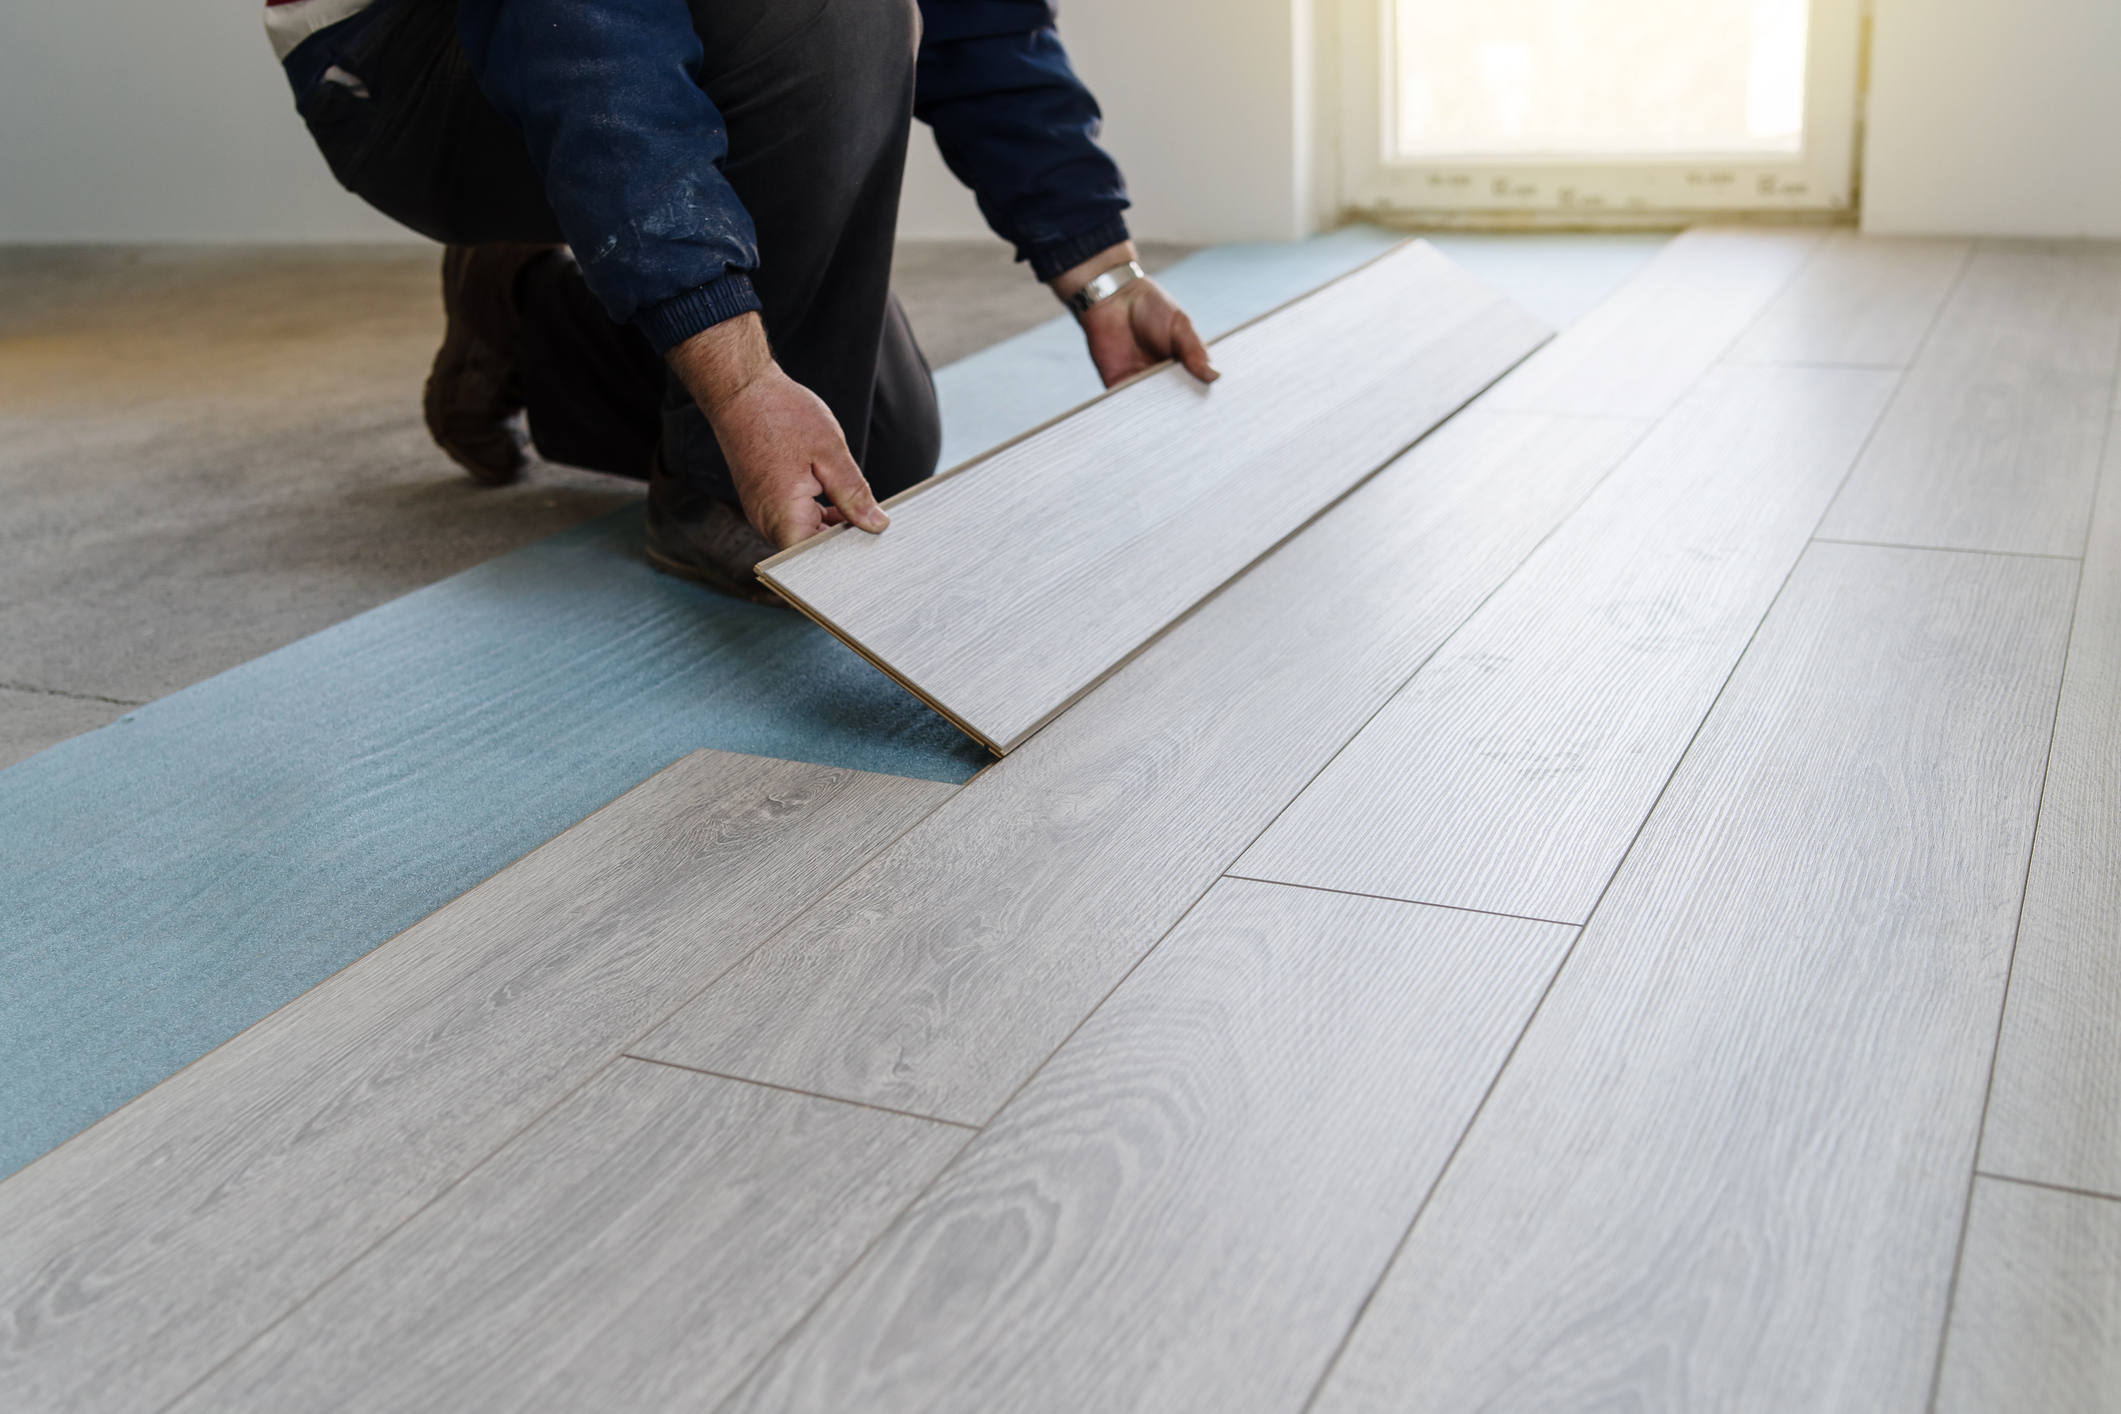 Temporary Flooring Ideas, Laminate Flooring On Top Of Carpet